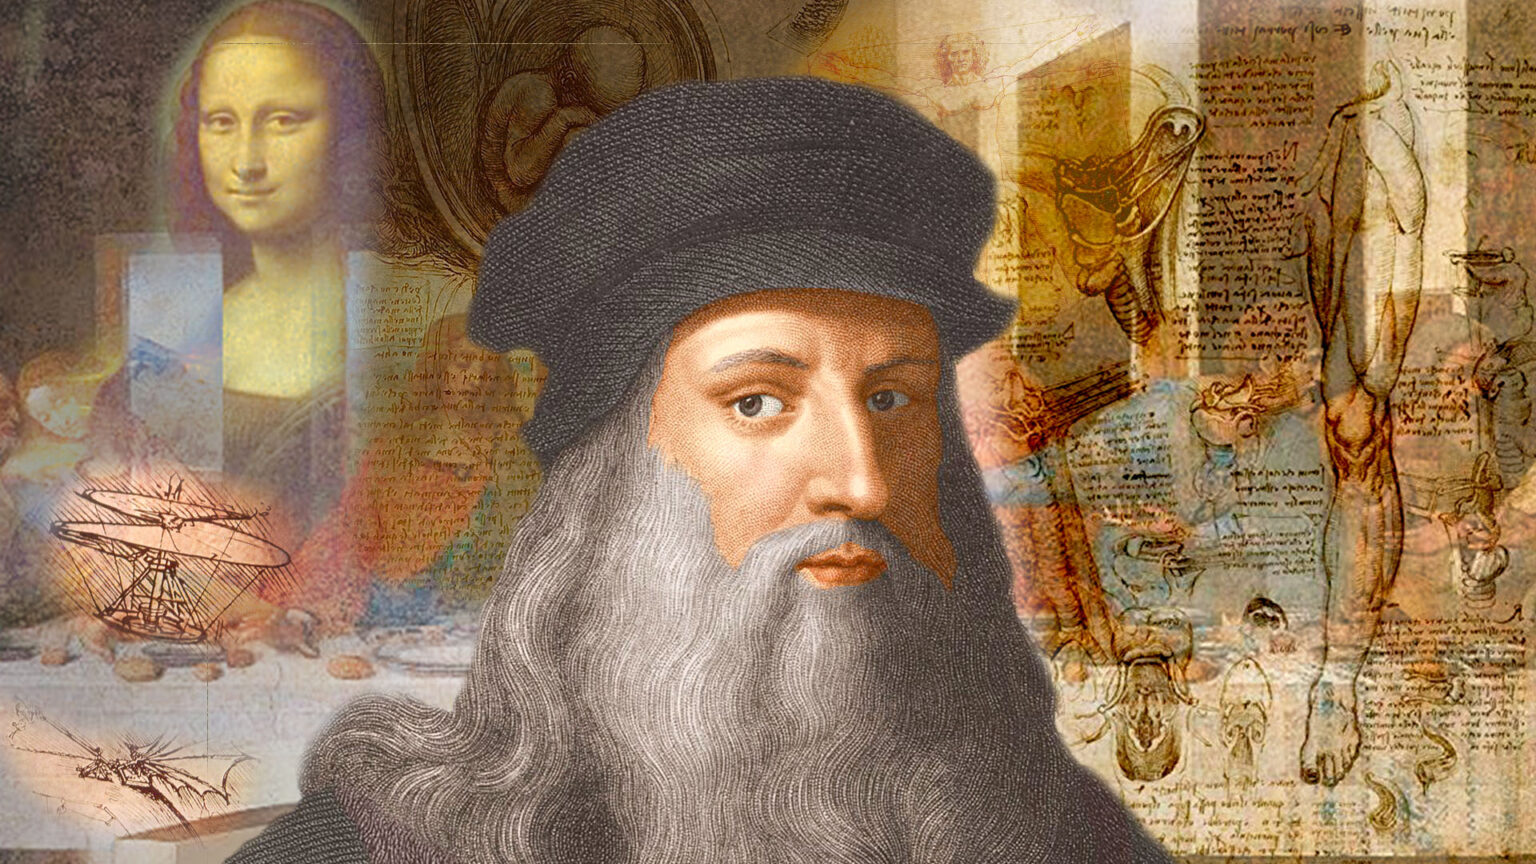 1452 Года родился Леонардо да Винчи